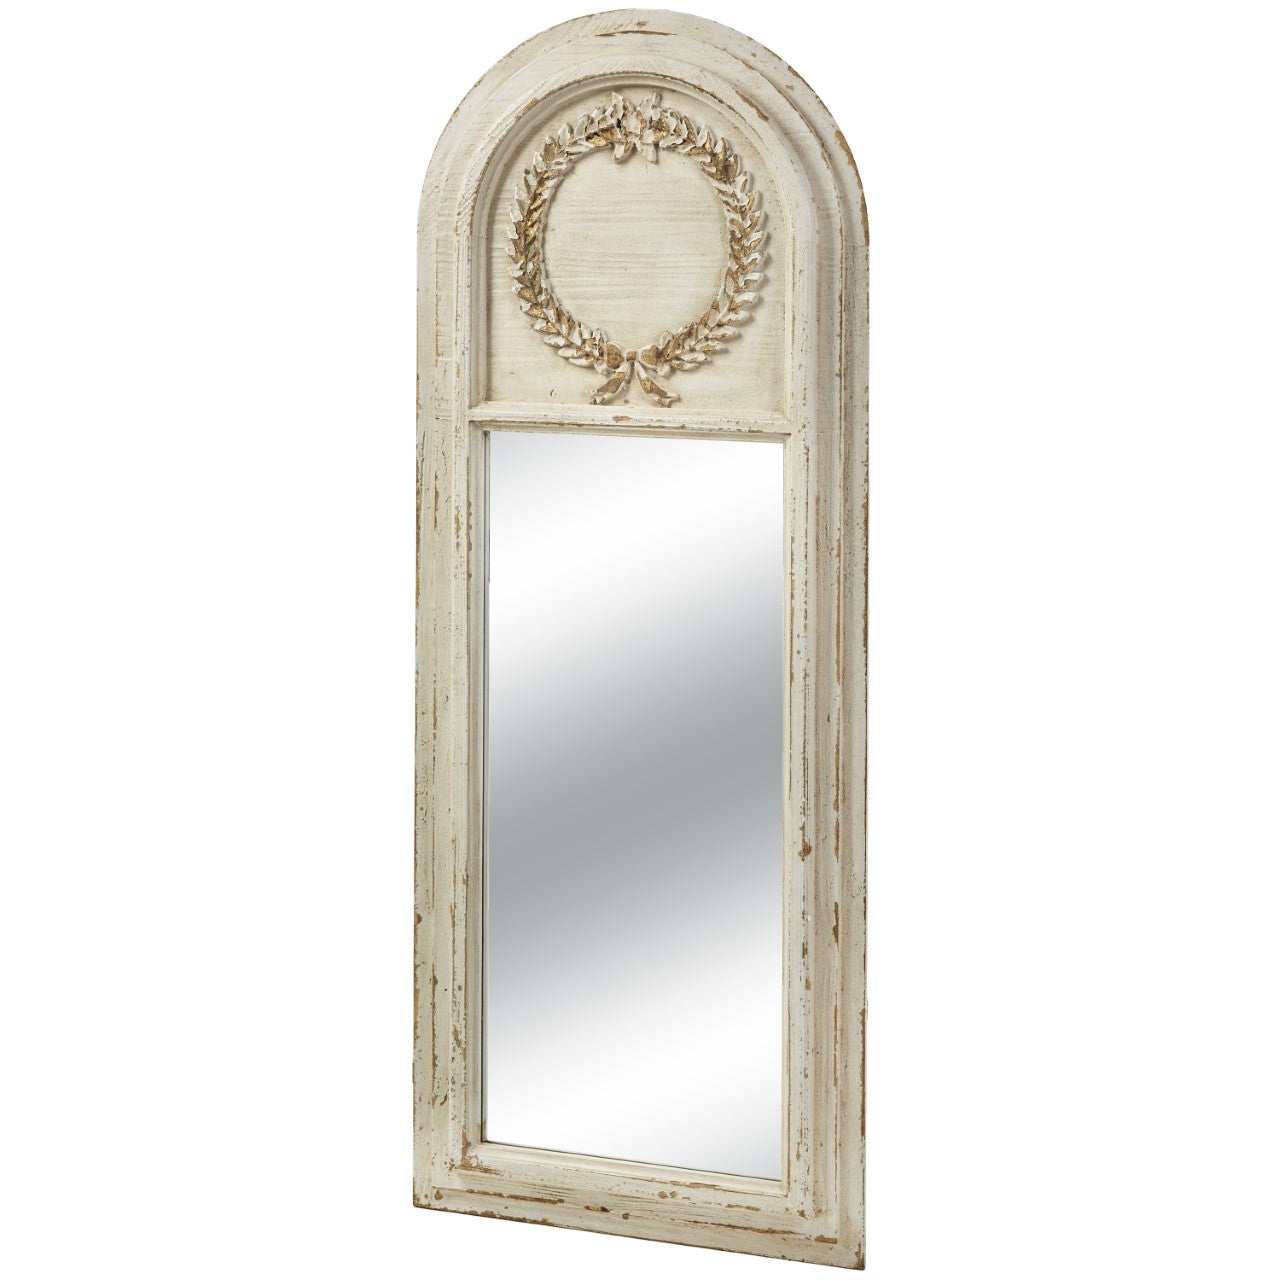 Distressed Trumeau Mirror